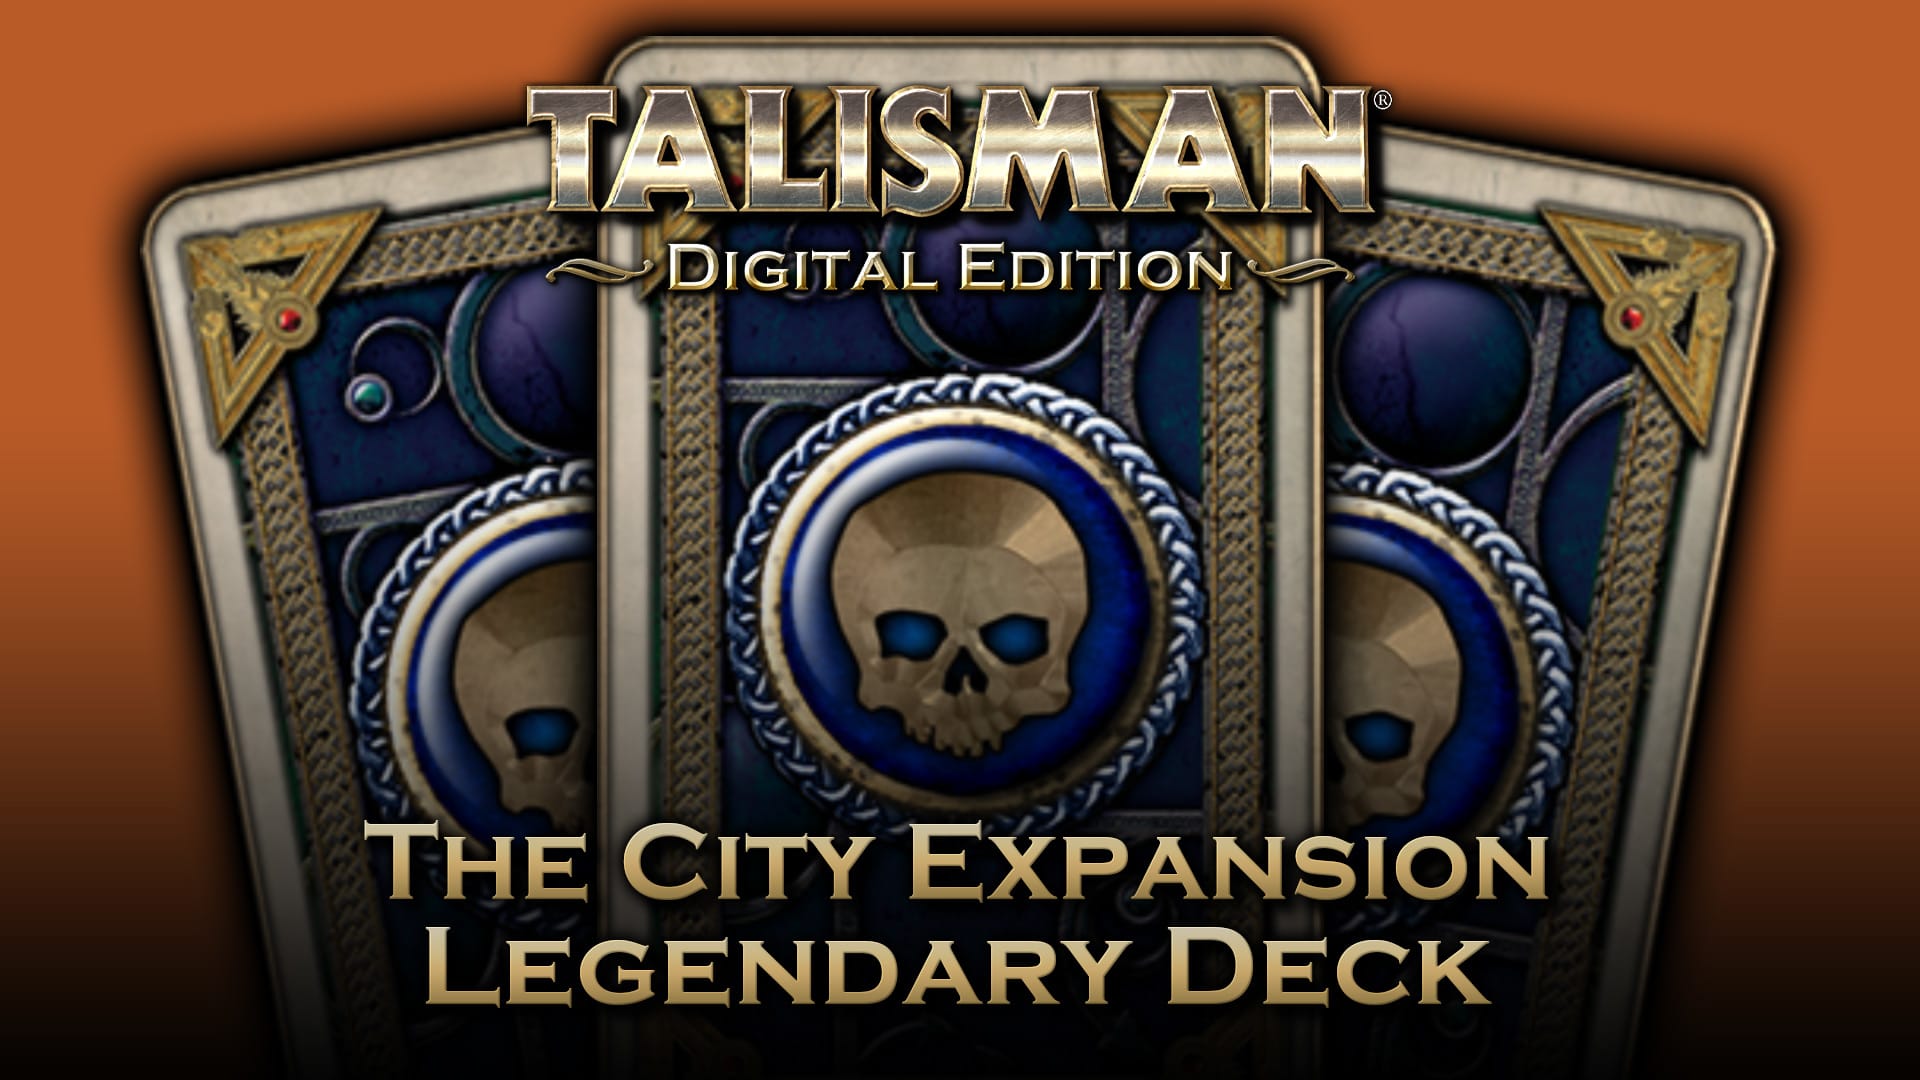 The City Expansion: Legendary Deck